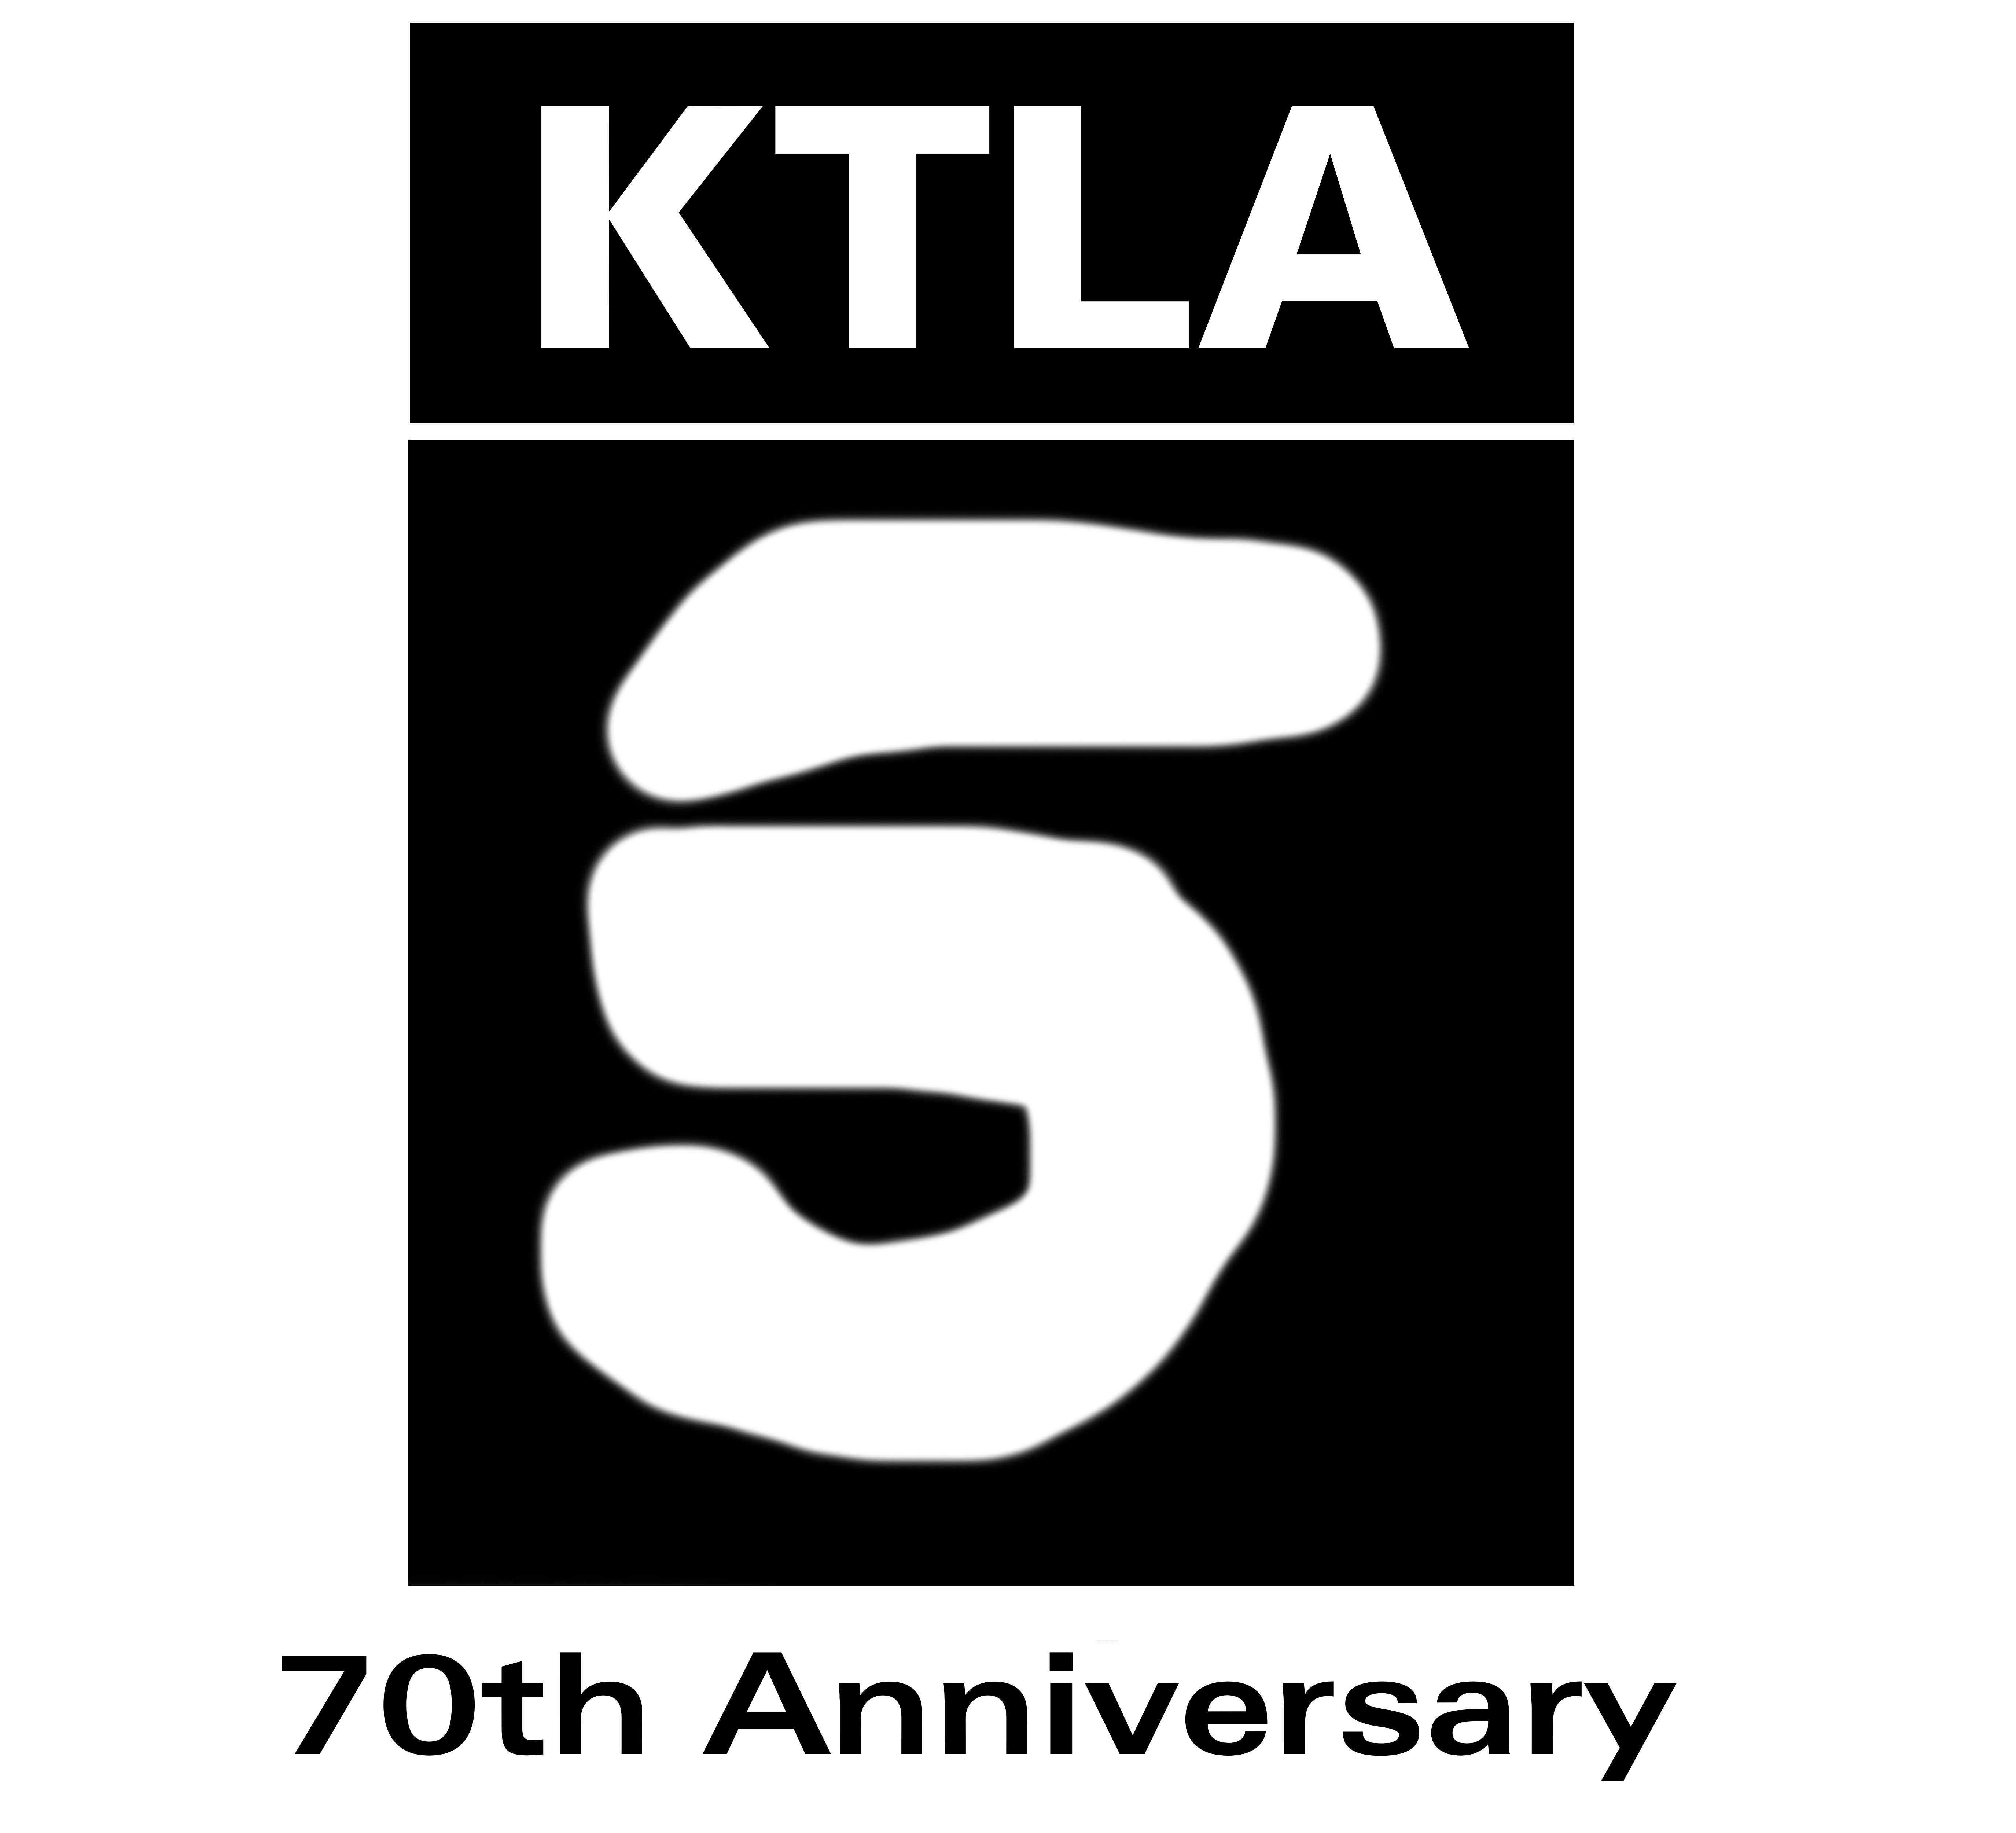 The 70th Anniversary of KTLA-TV